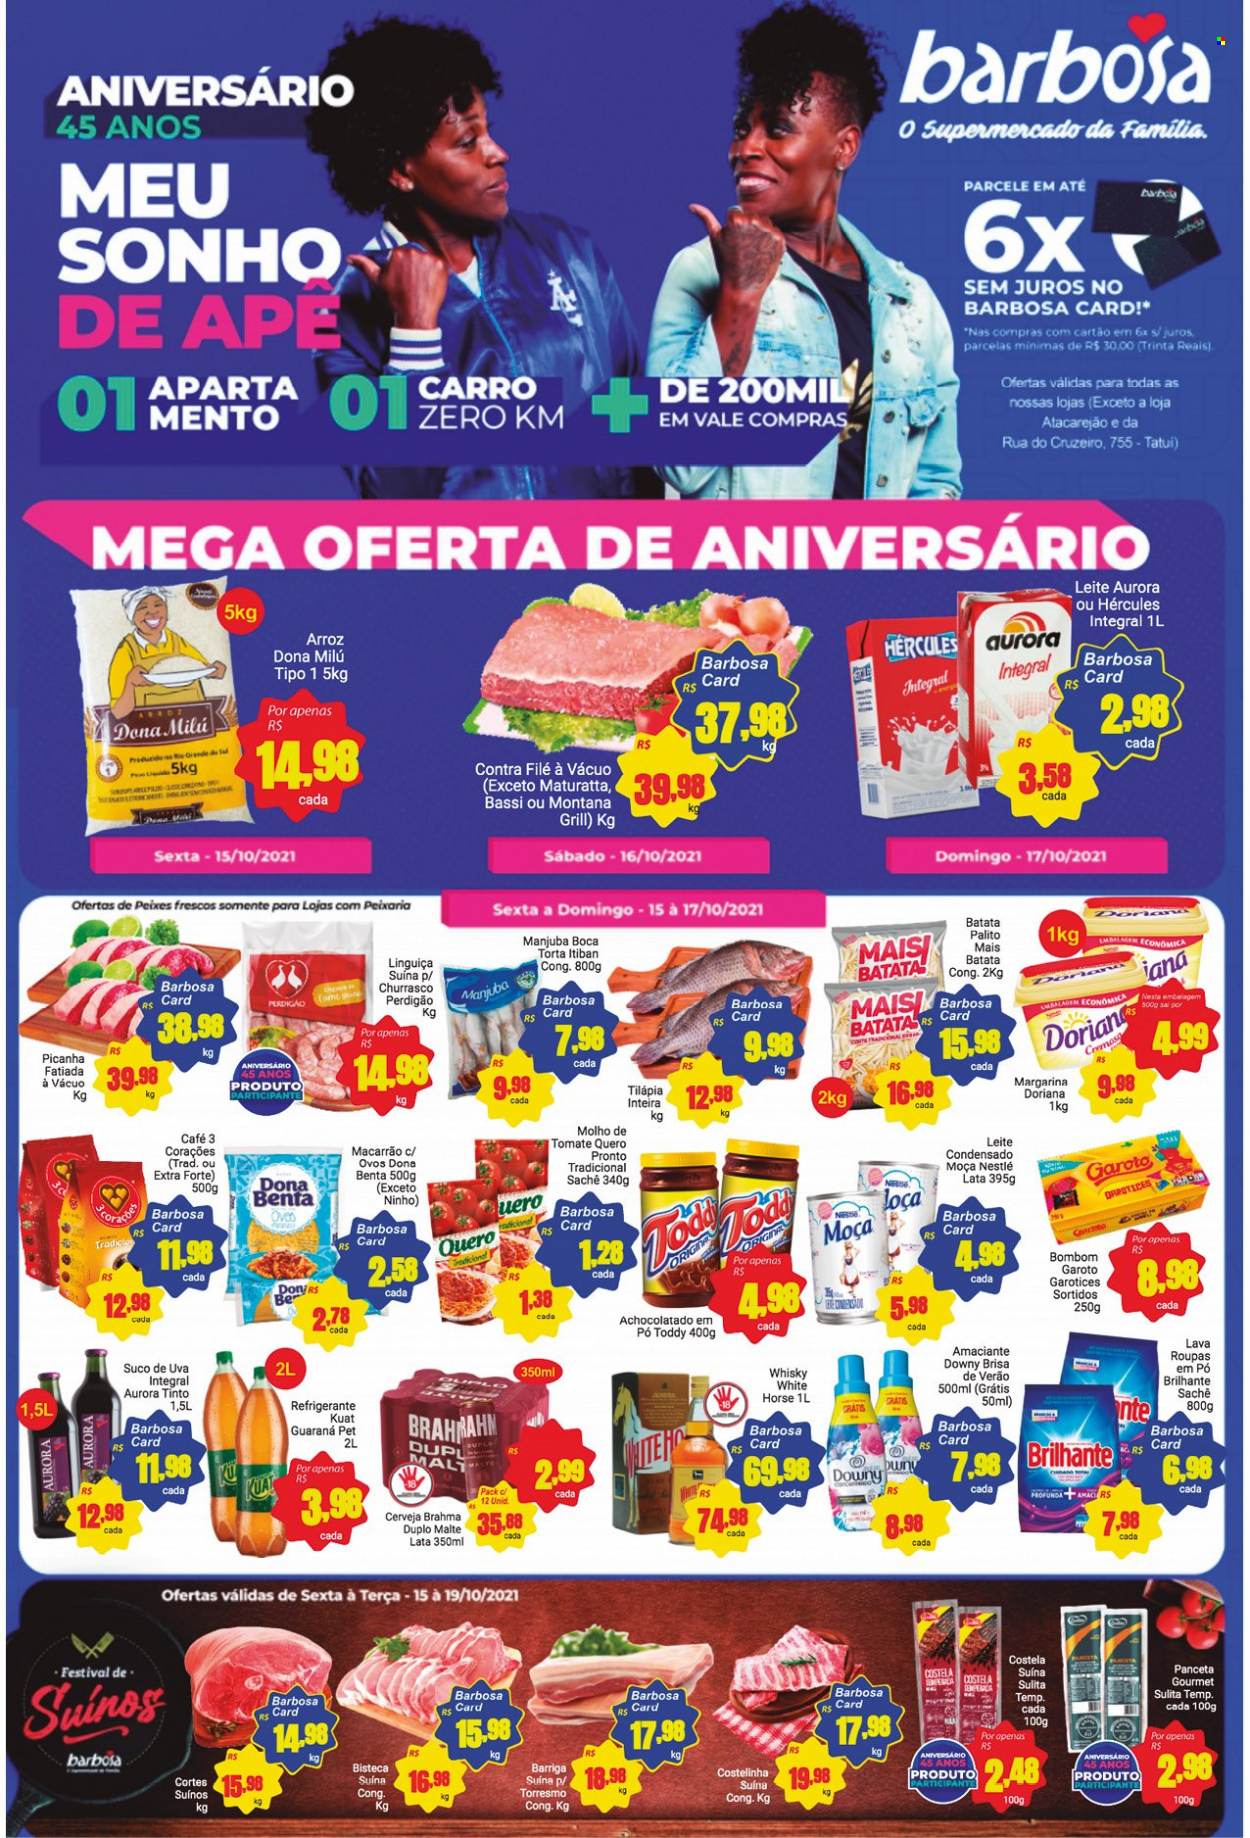 Encarte Barbosa Supermercados  - 15.10.2021 - 19.10.2021.